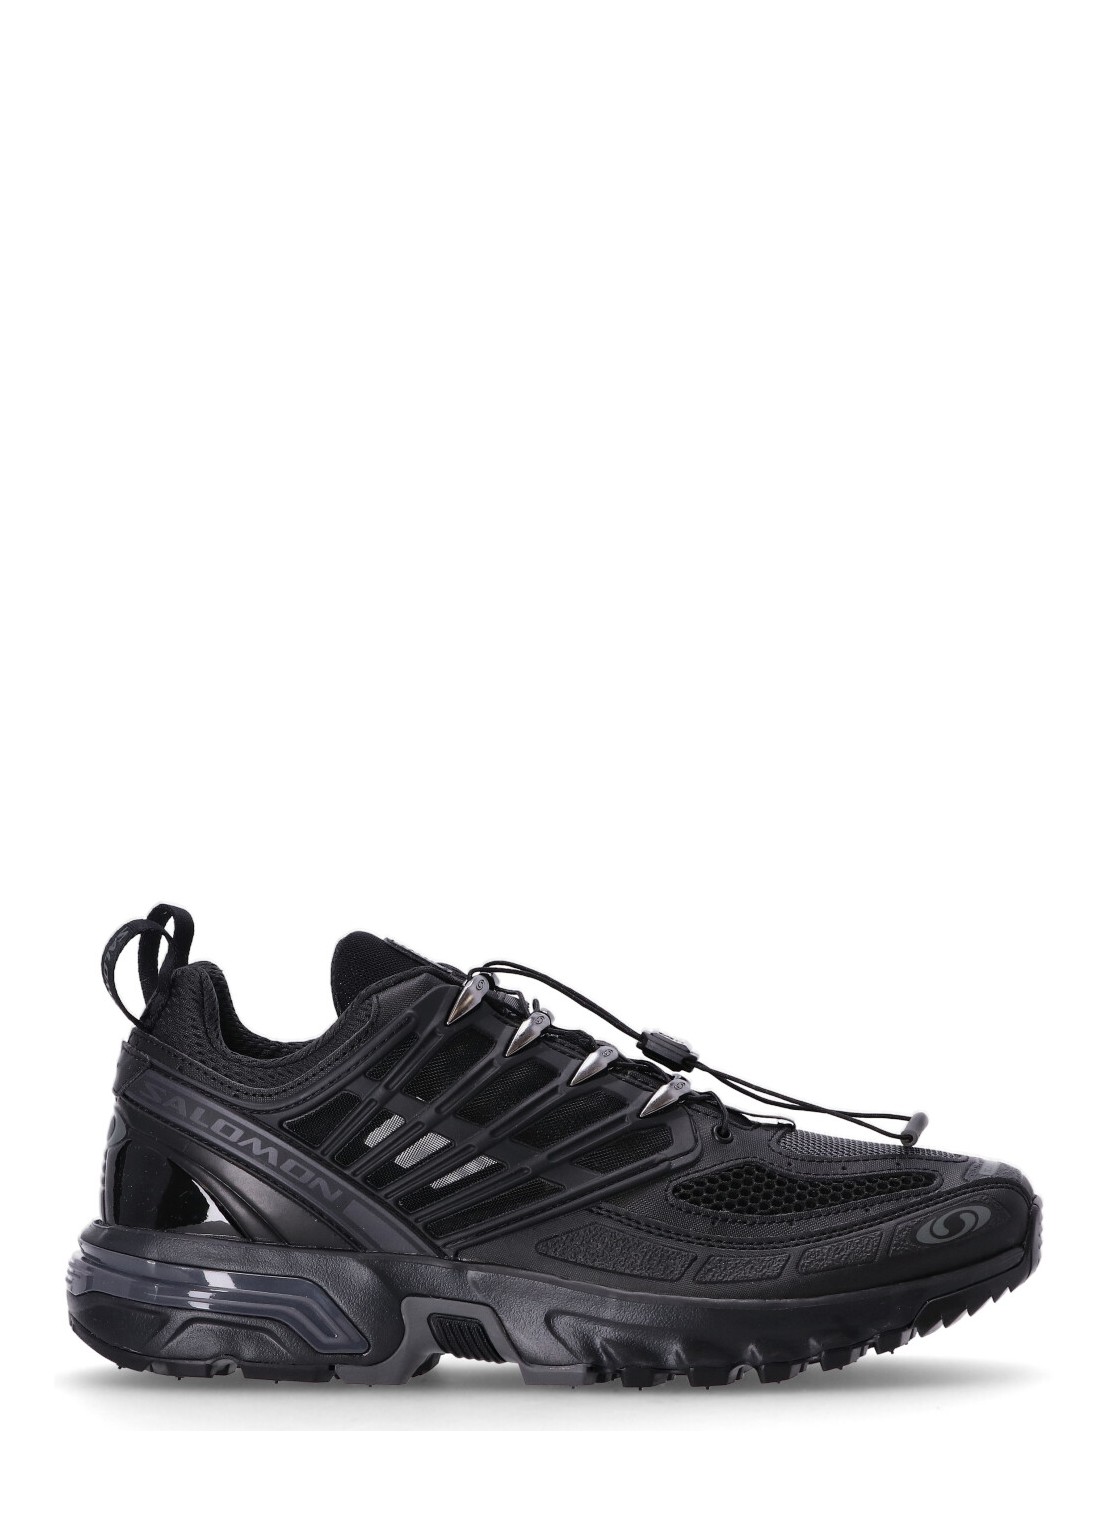 Sneaker salomon sneaker man acs pro l47179800 black black black talla 45 1/3
 